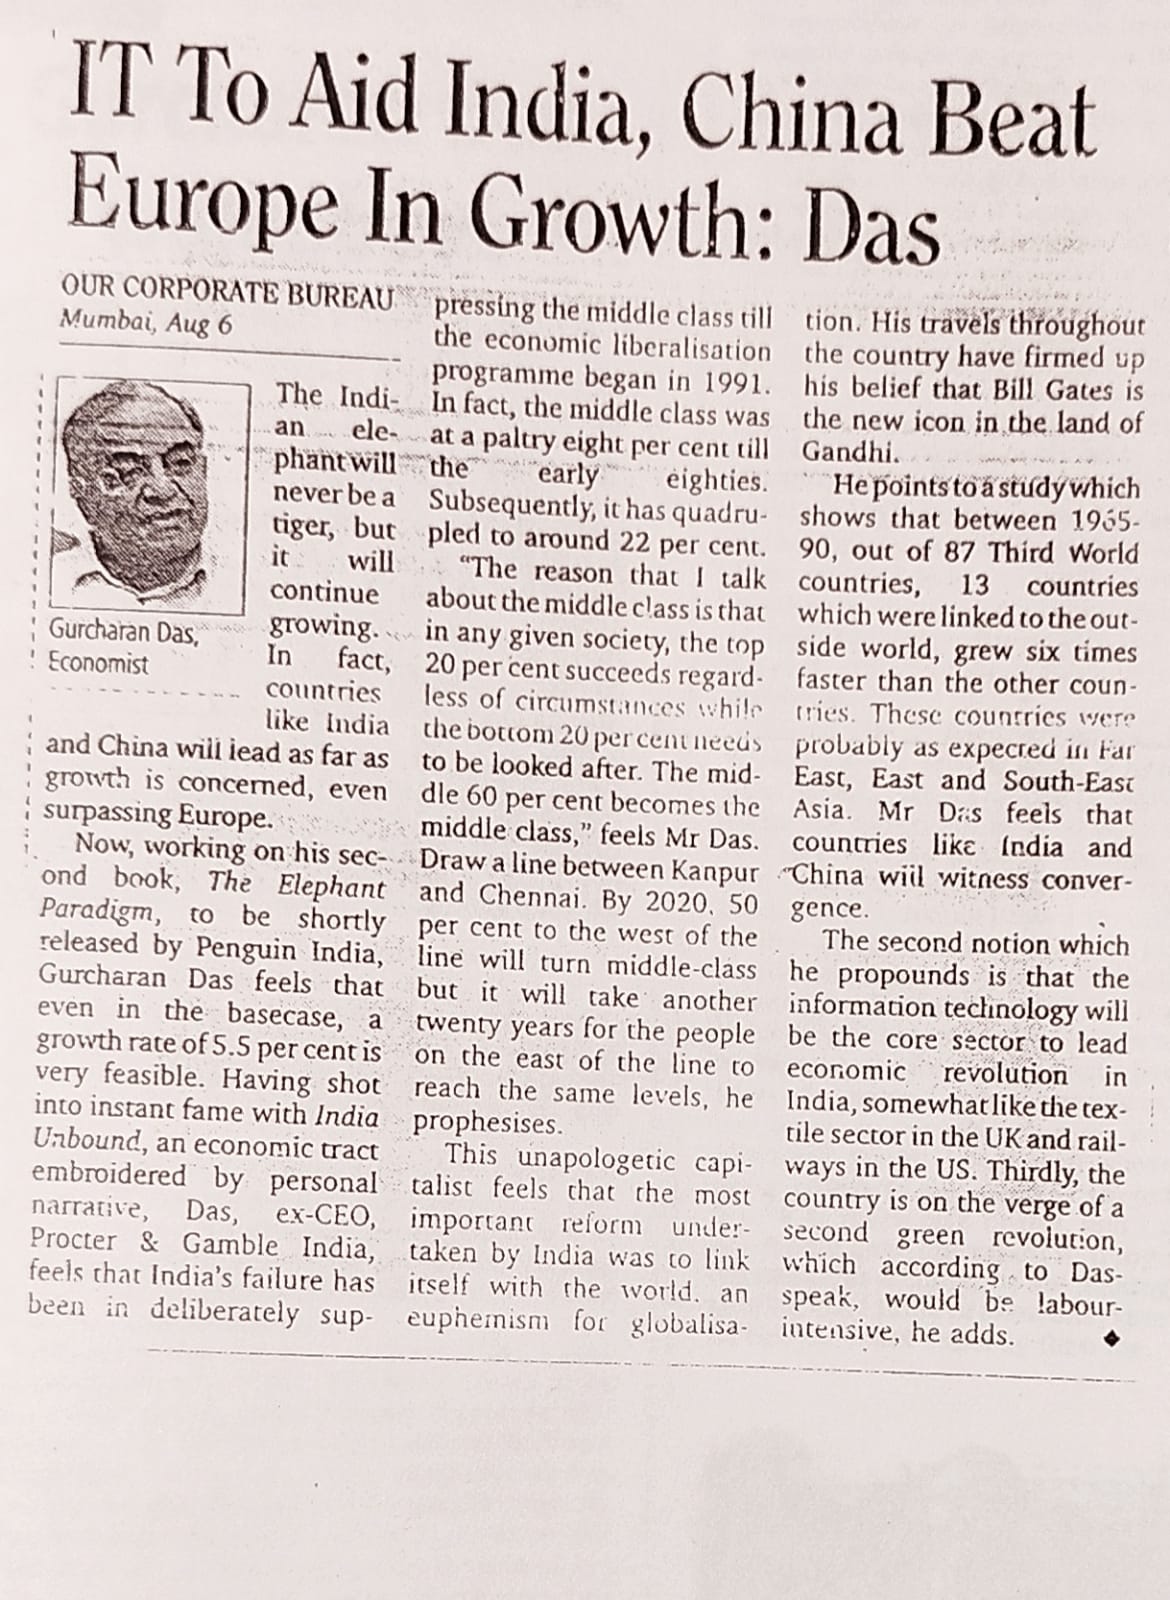 IT to aid India - China beat Europe in growth -Guru